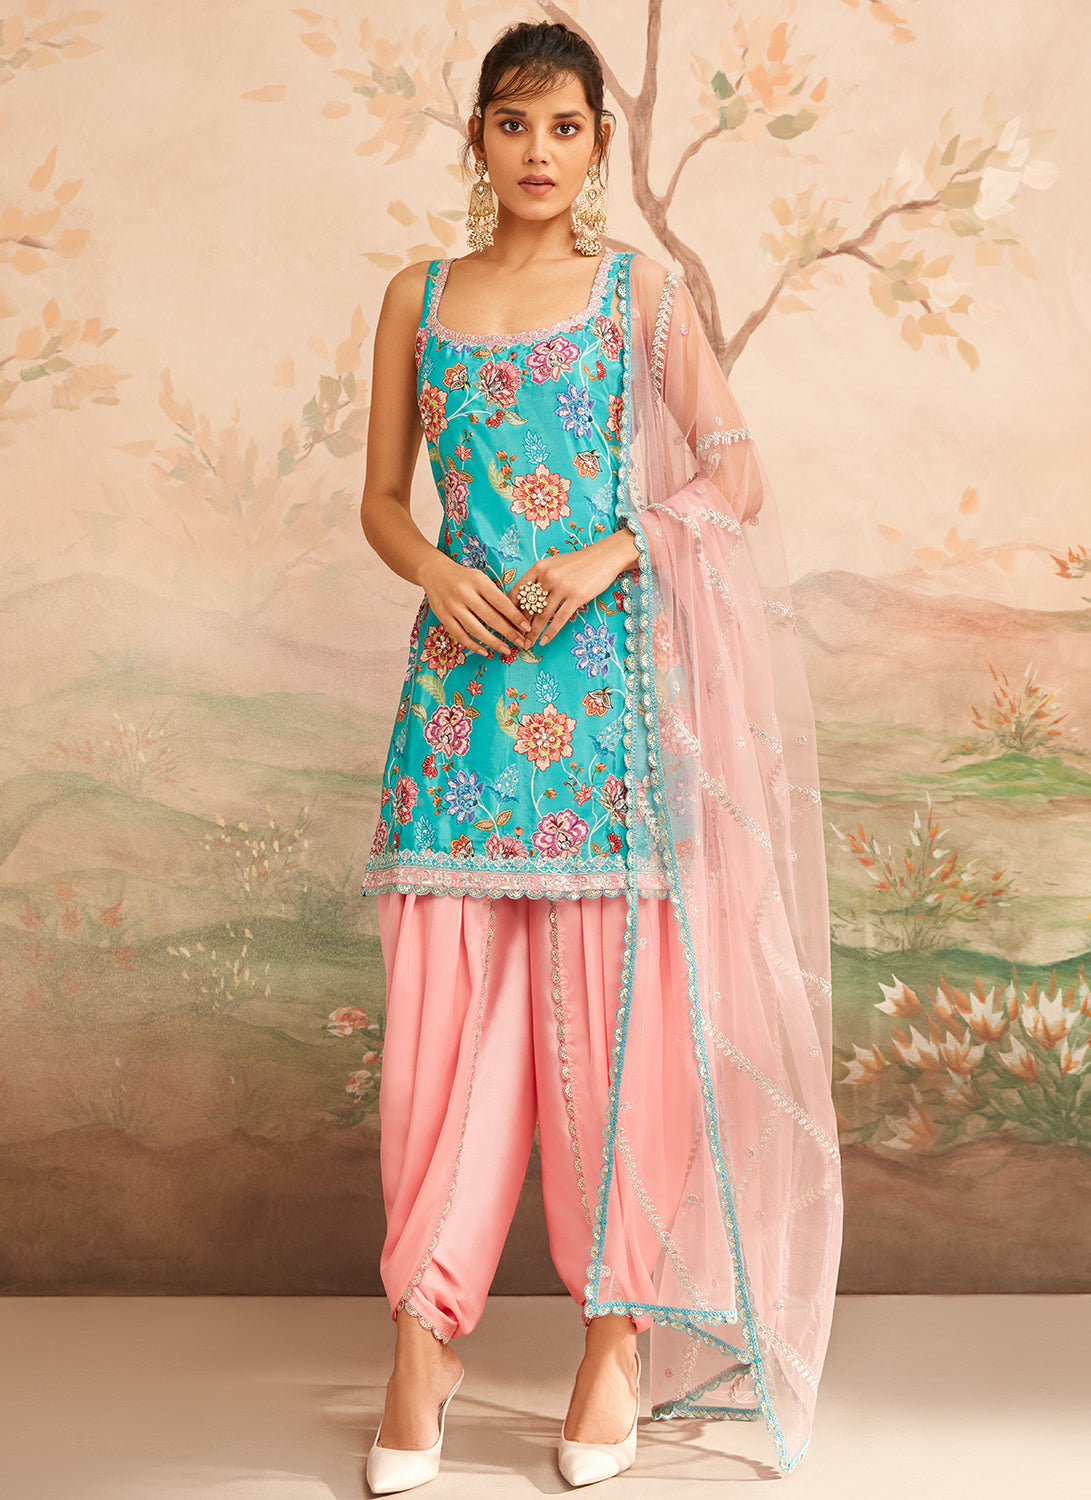 Cotton Suits Women - Buy Cotton Suits Women online in India